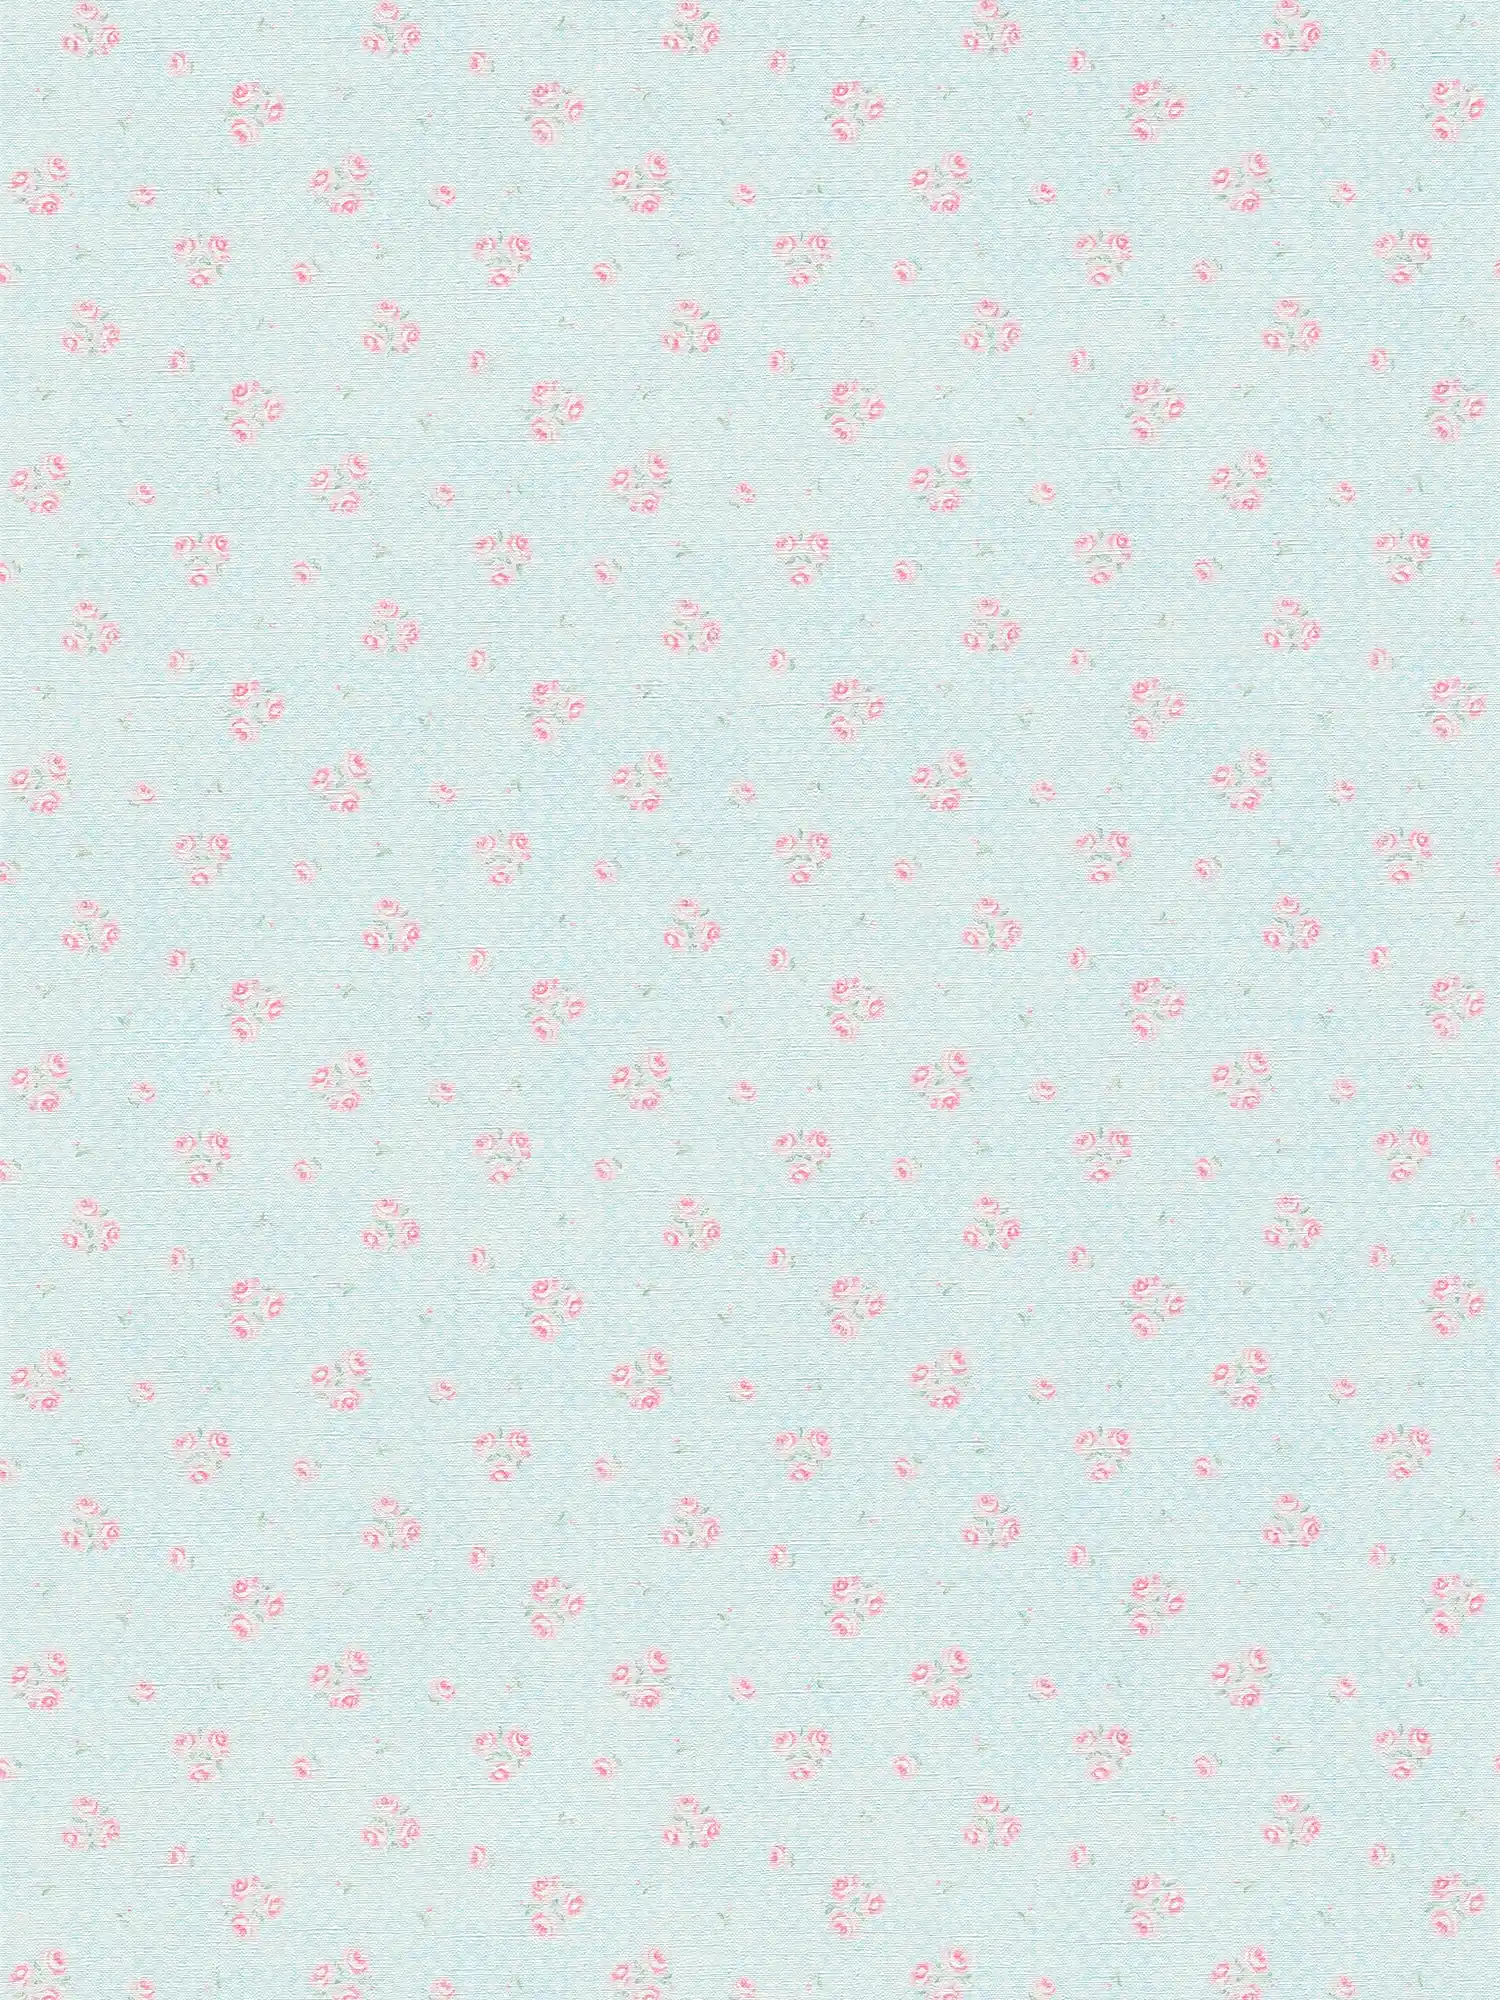 Shabby Chic stijl bloemenbehang - blauw, roze, wit
